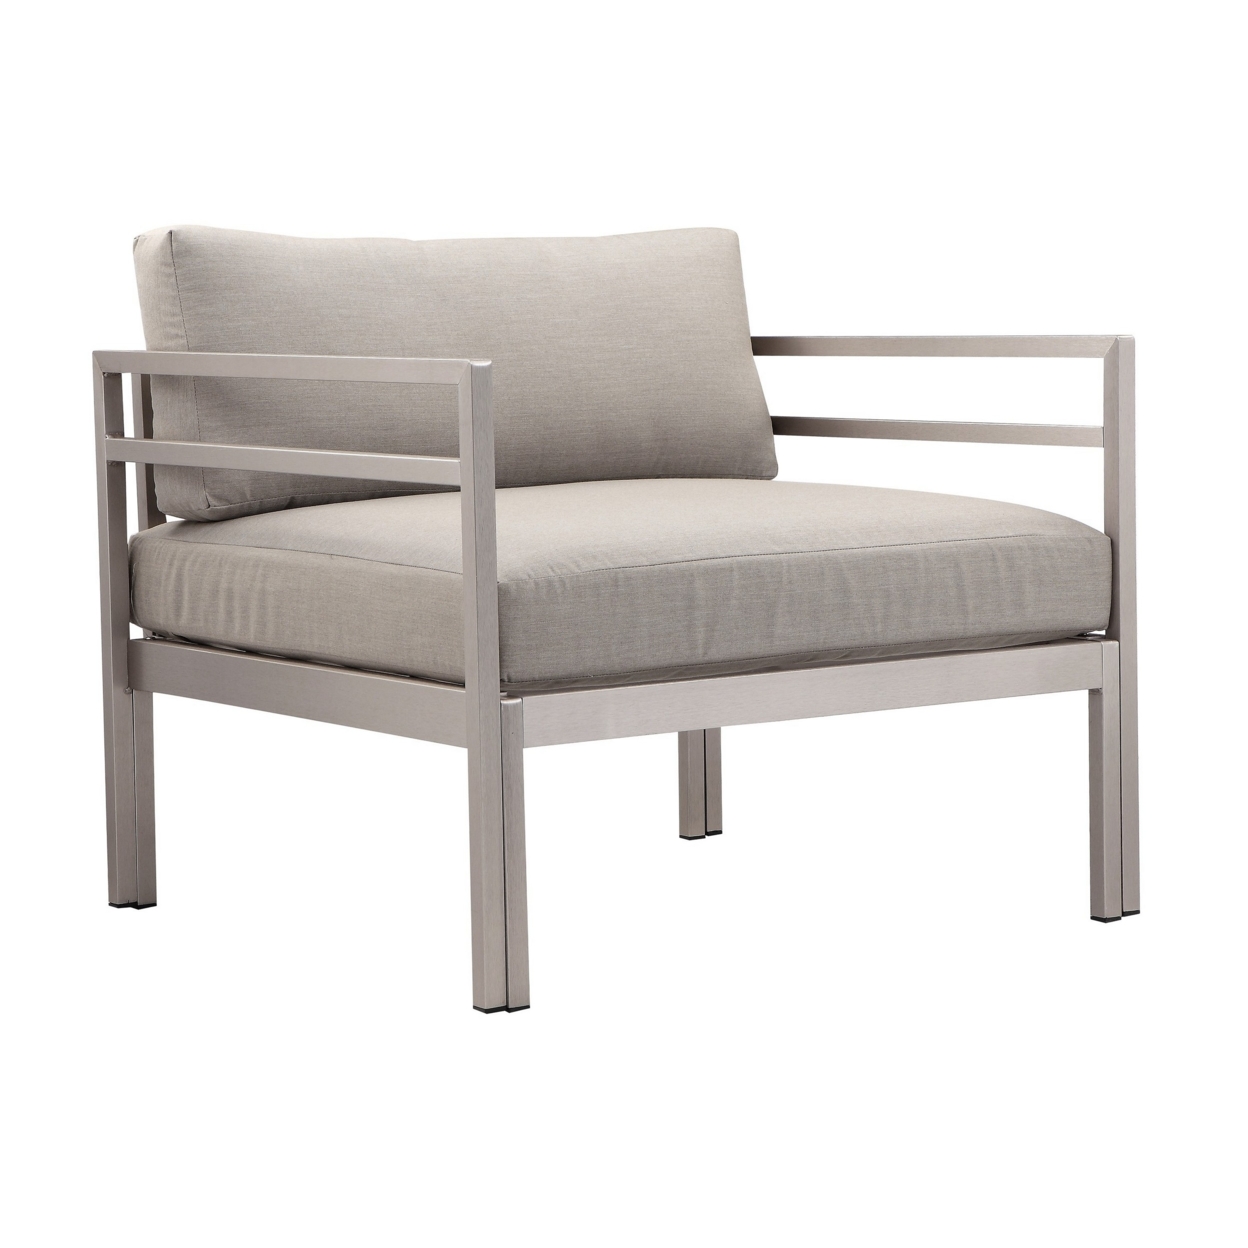 Billy 34 Inch Modern Outdoor Armchair, Gray Aluminum Frame, Fabric Cushions- Saltoro Sherpi